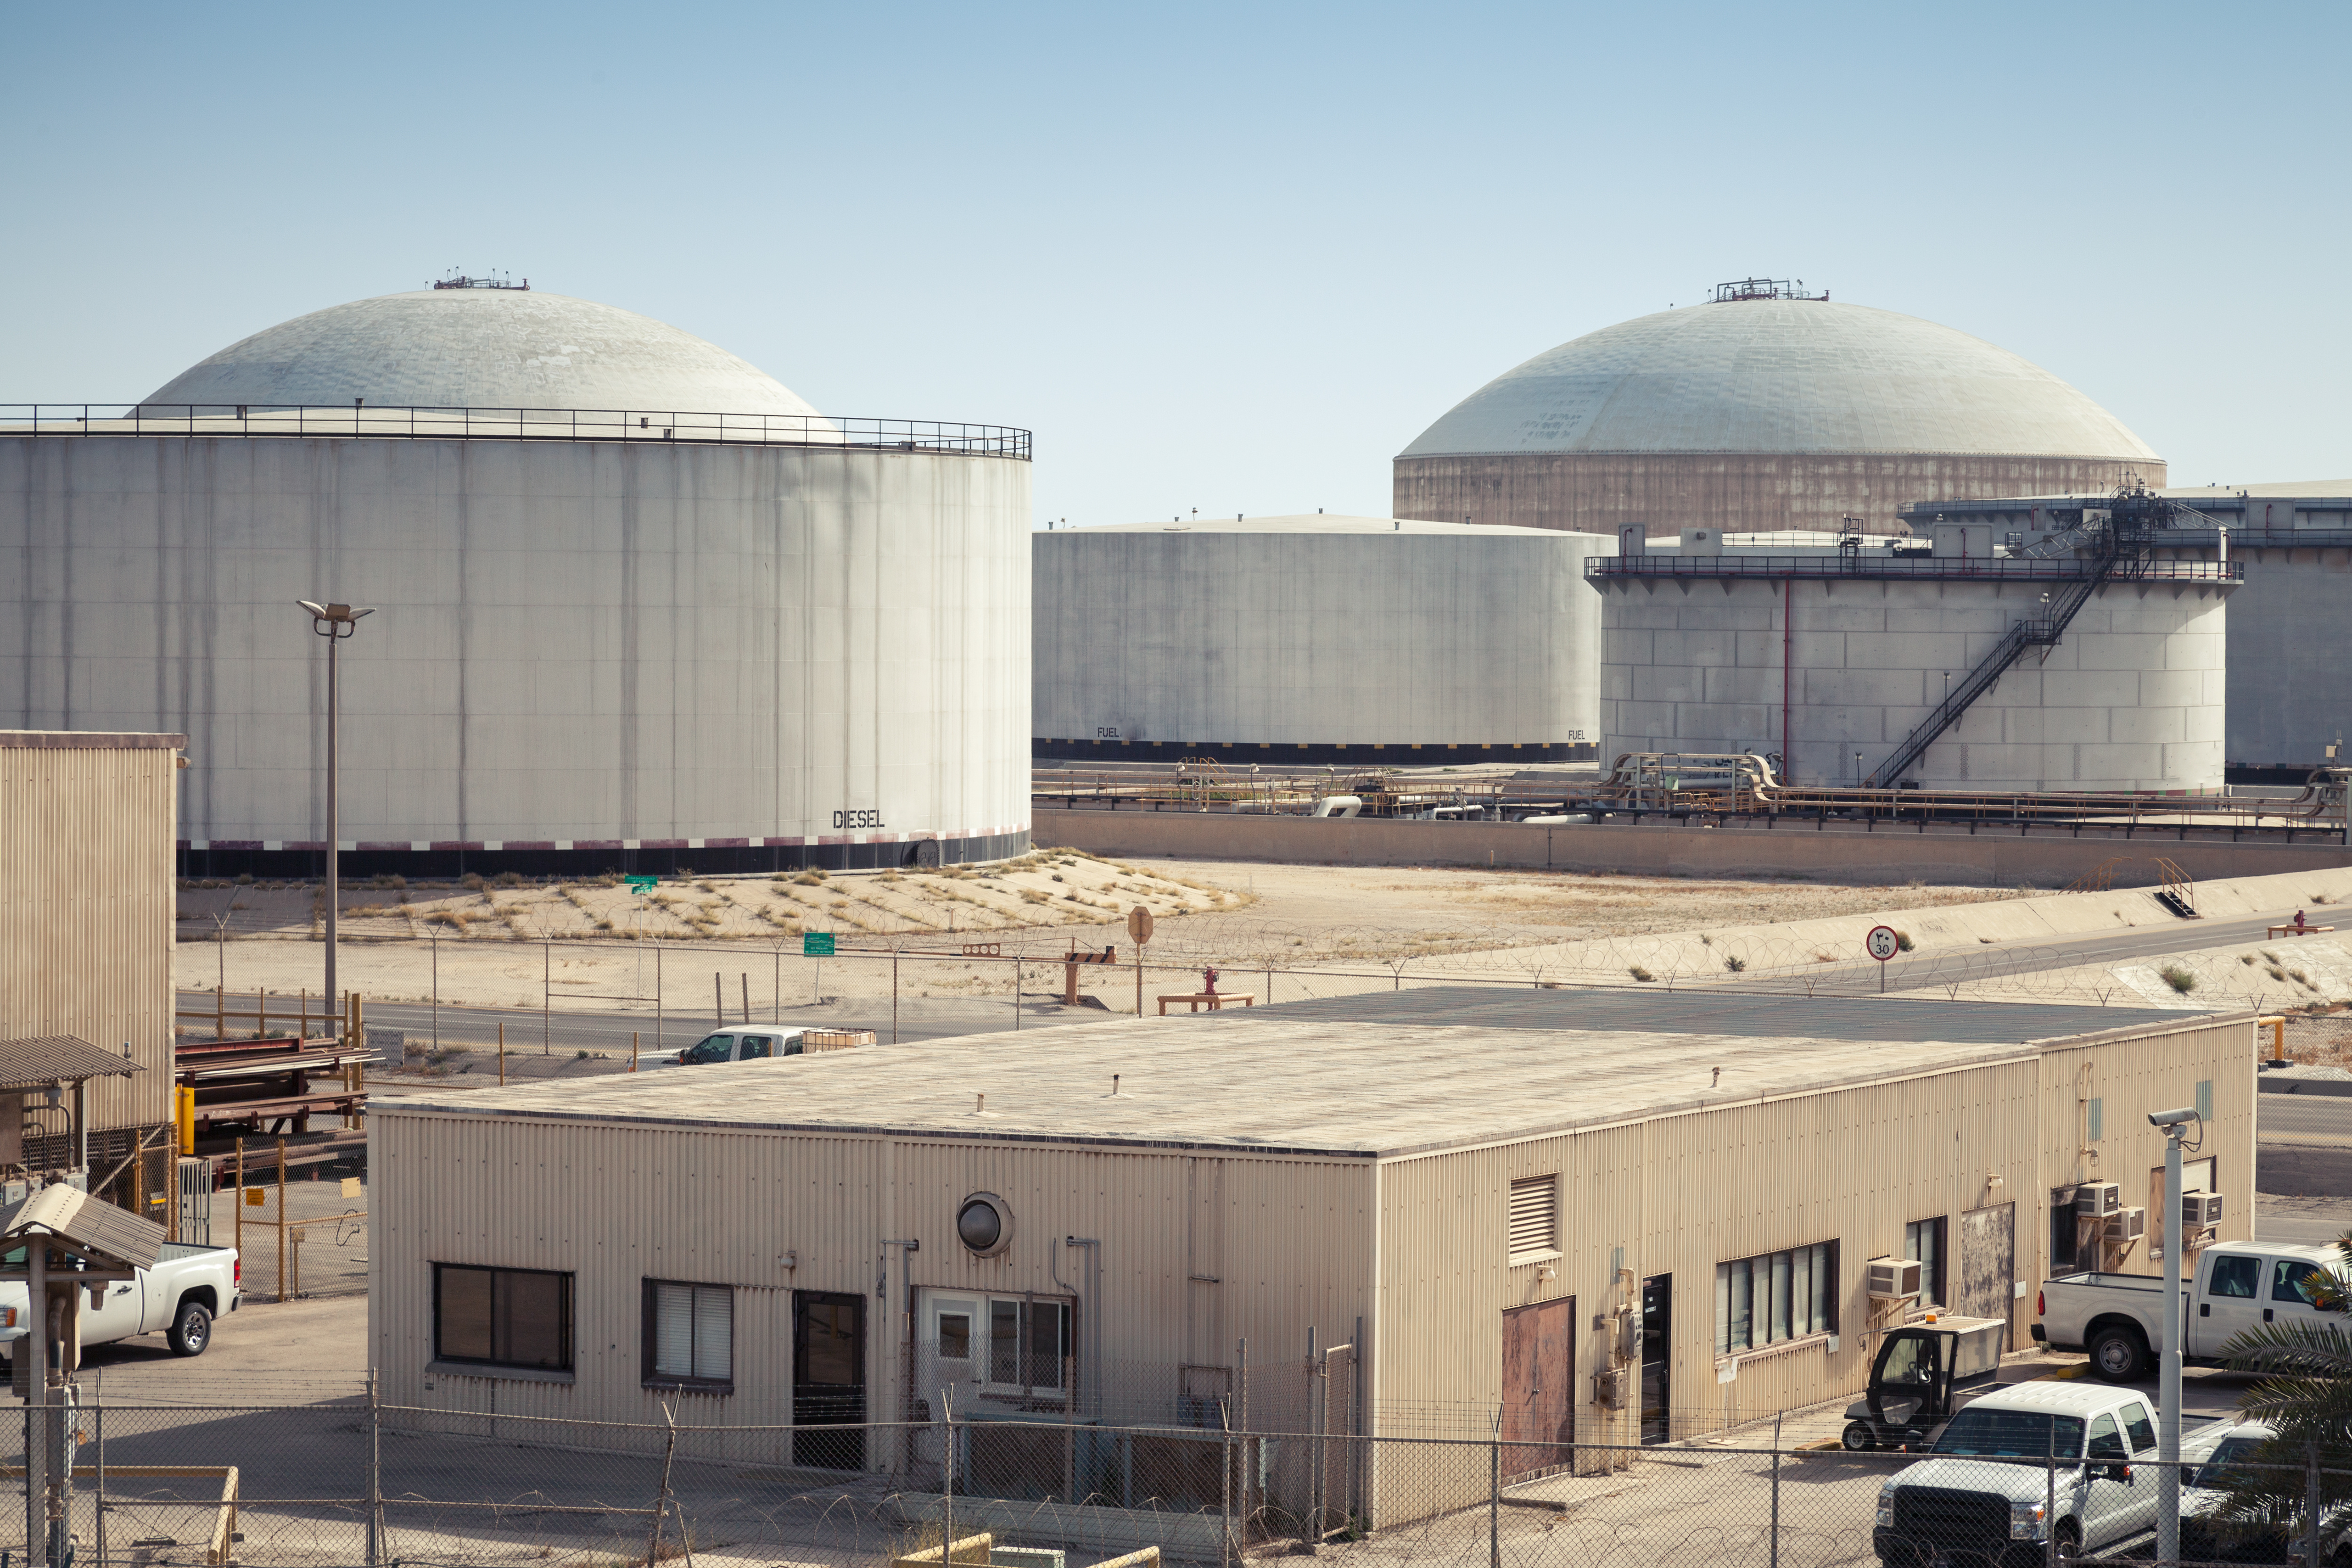 Ras Tanura oil terminal, Saudi Arabia. Photo courtesy of DollarPhotoClub.com